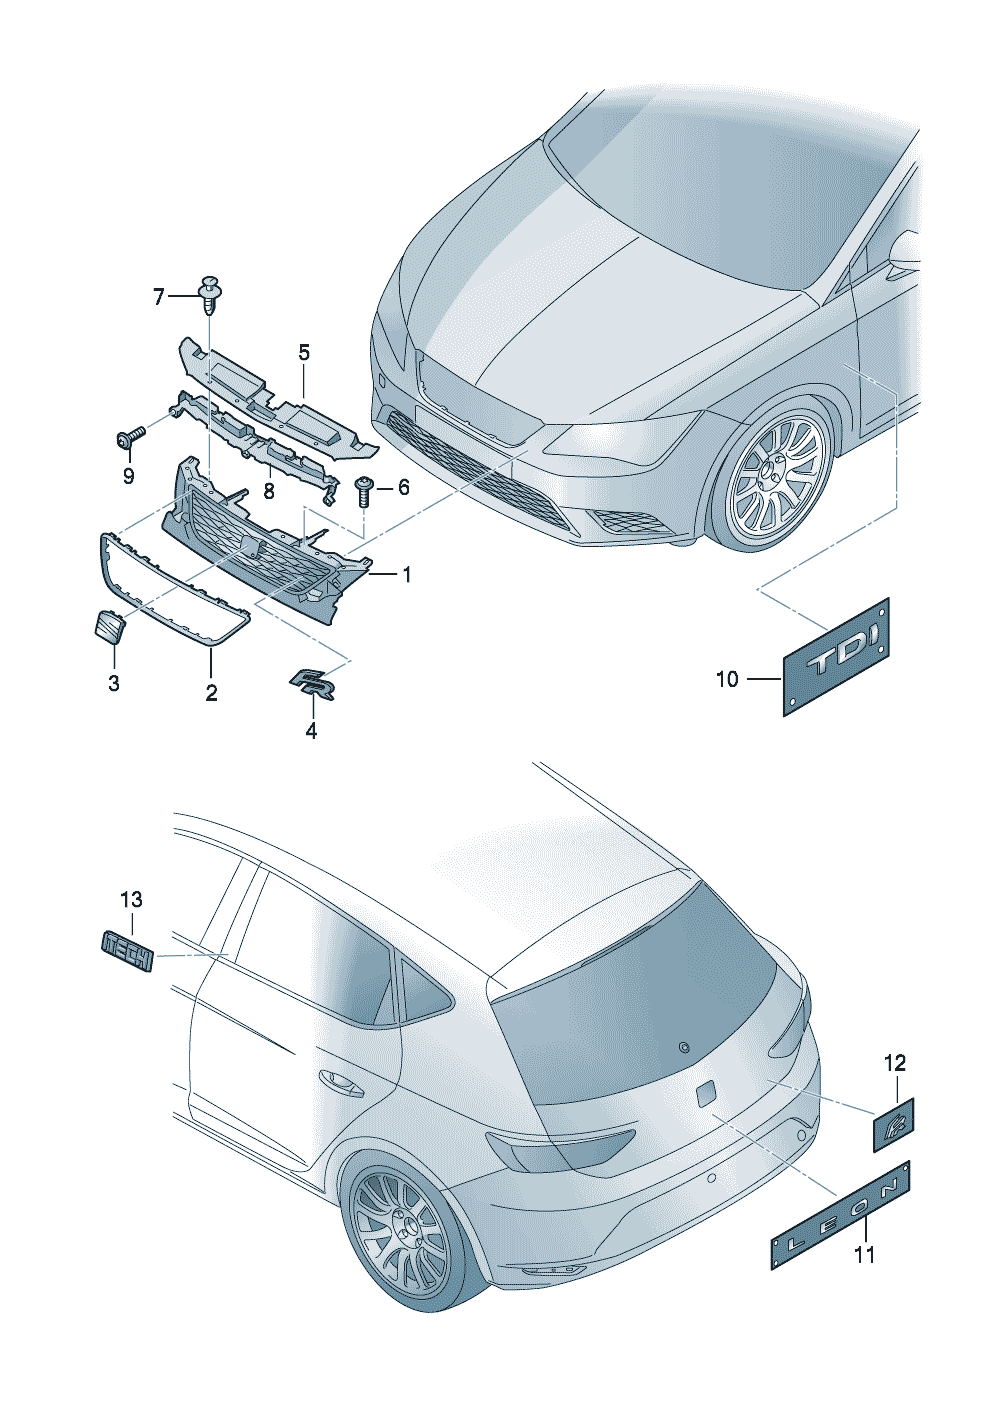 Radiator grilleinscriptions/lettering  - Leon (SEAT) - le